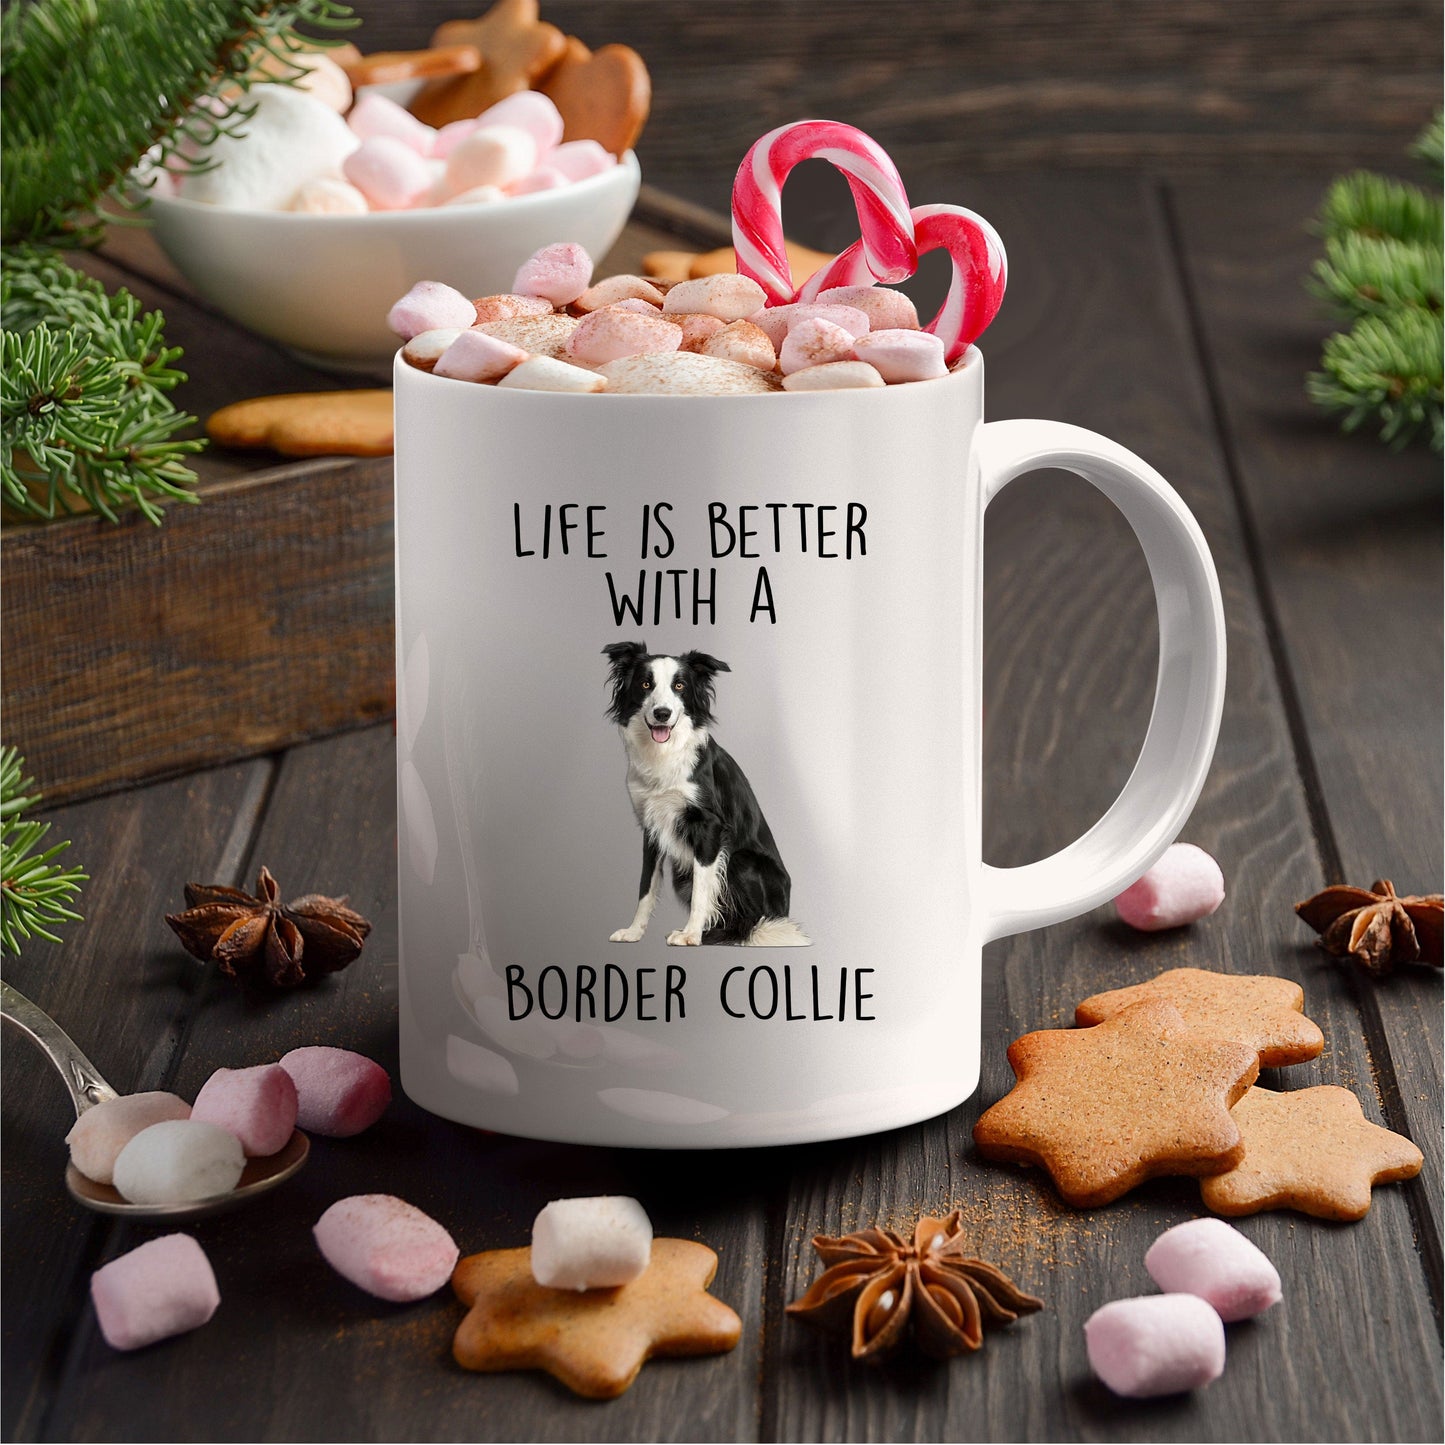 Border Collie Dog Ceramic Coffee Mug - Life is Better